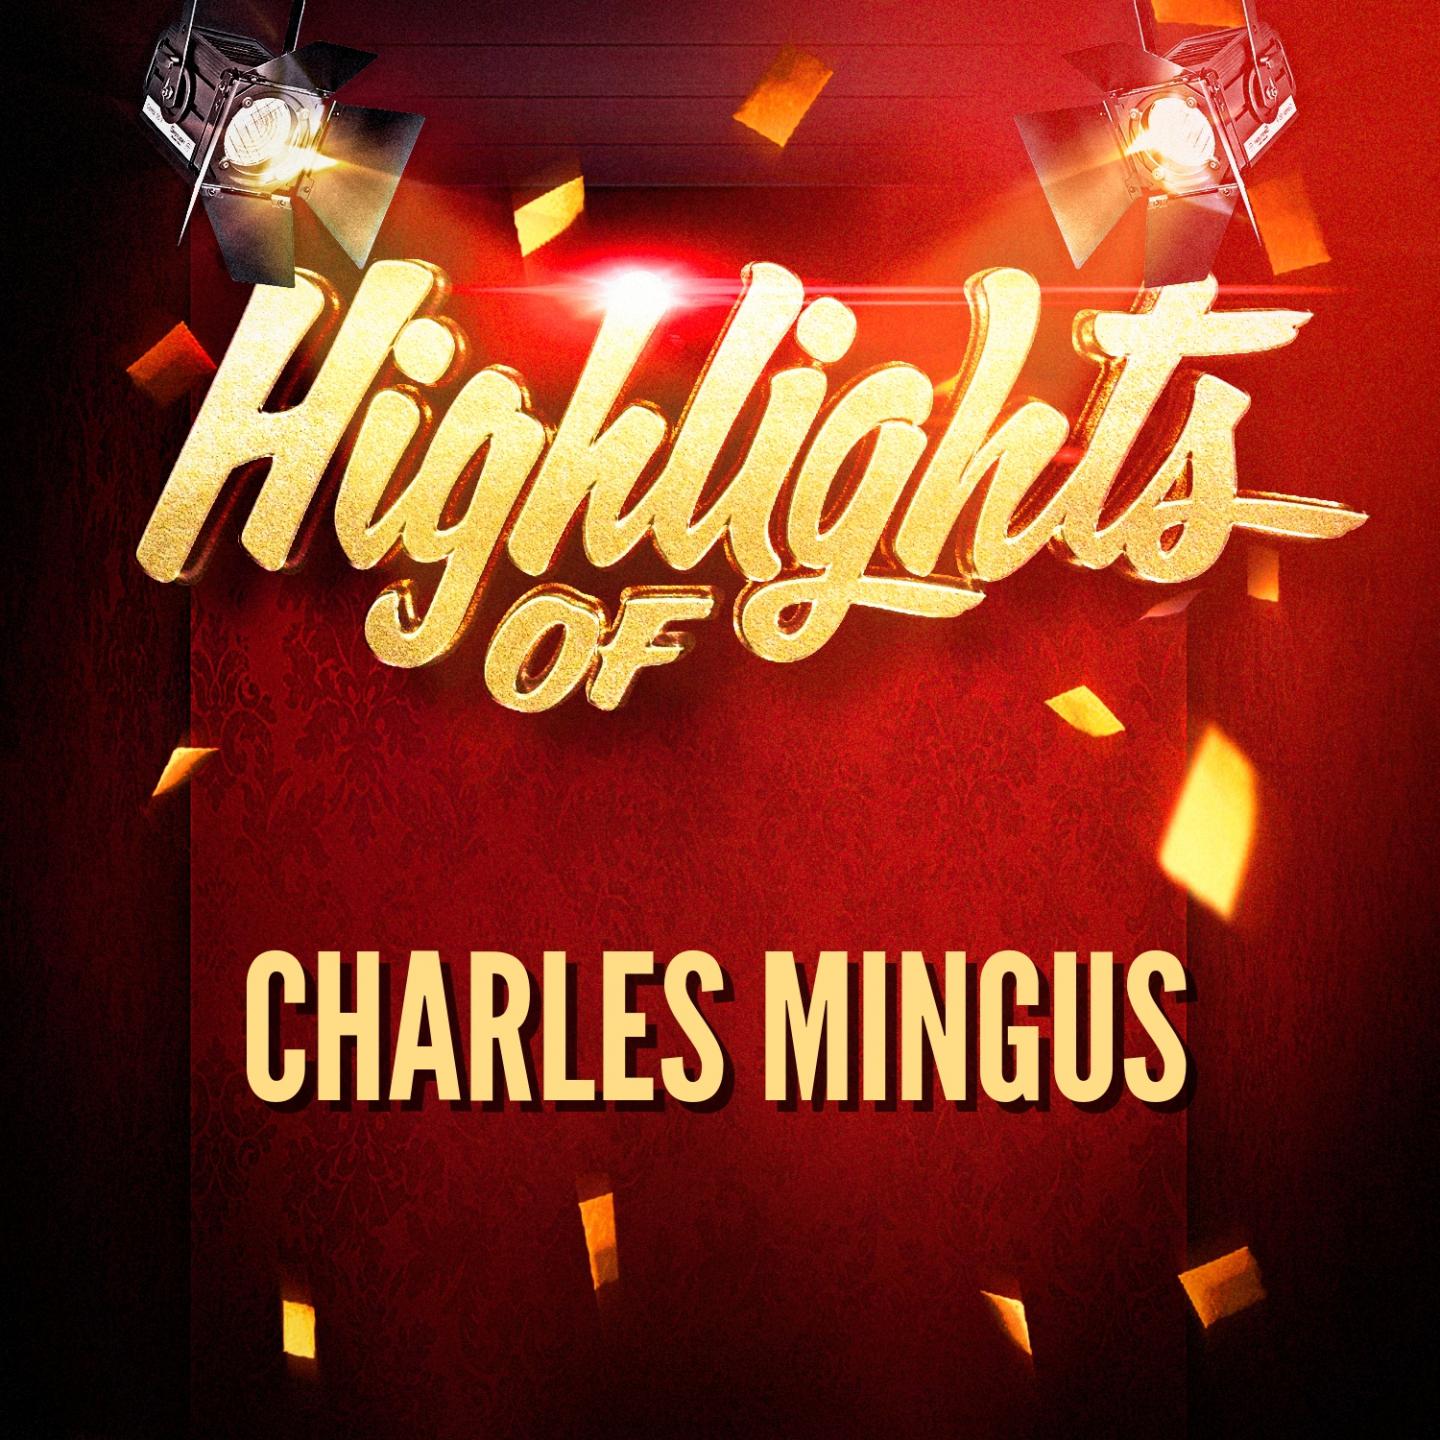 Highlights of Charles Mingus